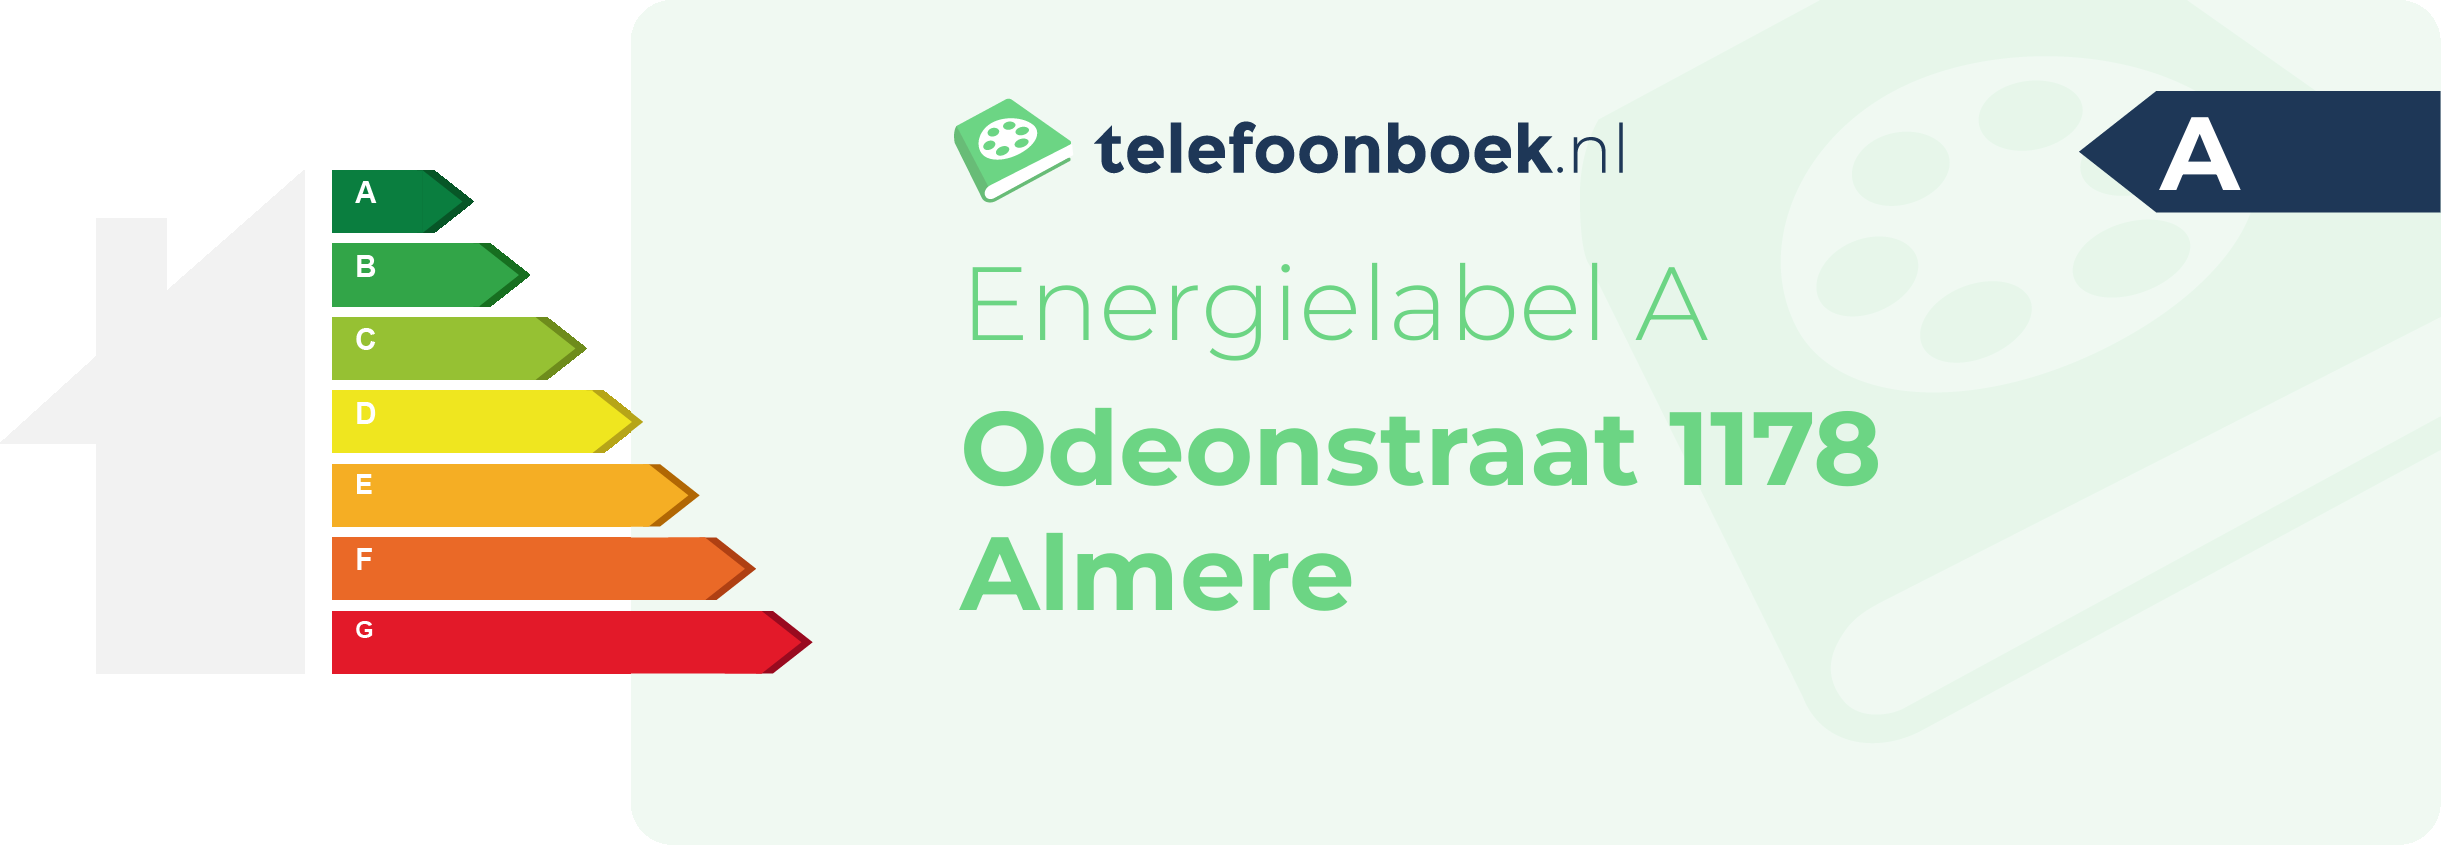 Energielabel Odeonstraat 1178 Almere